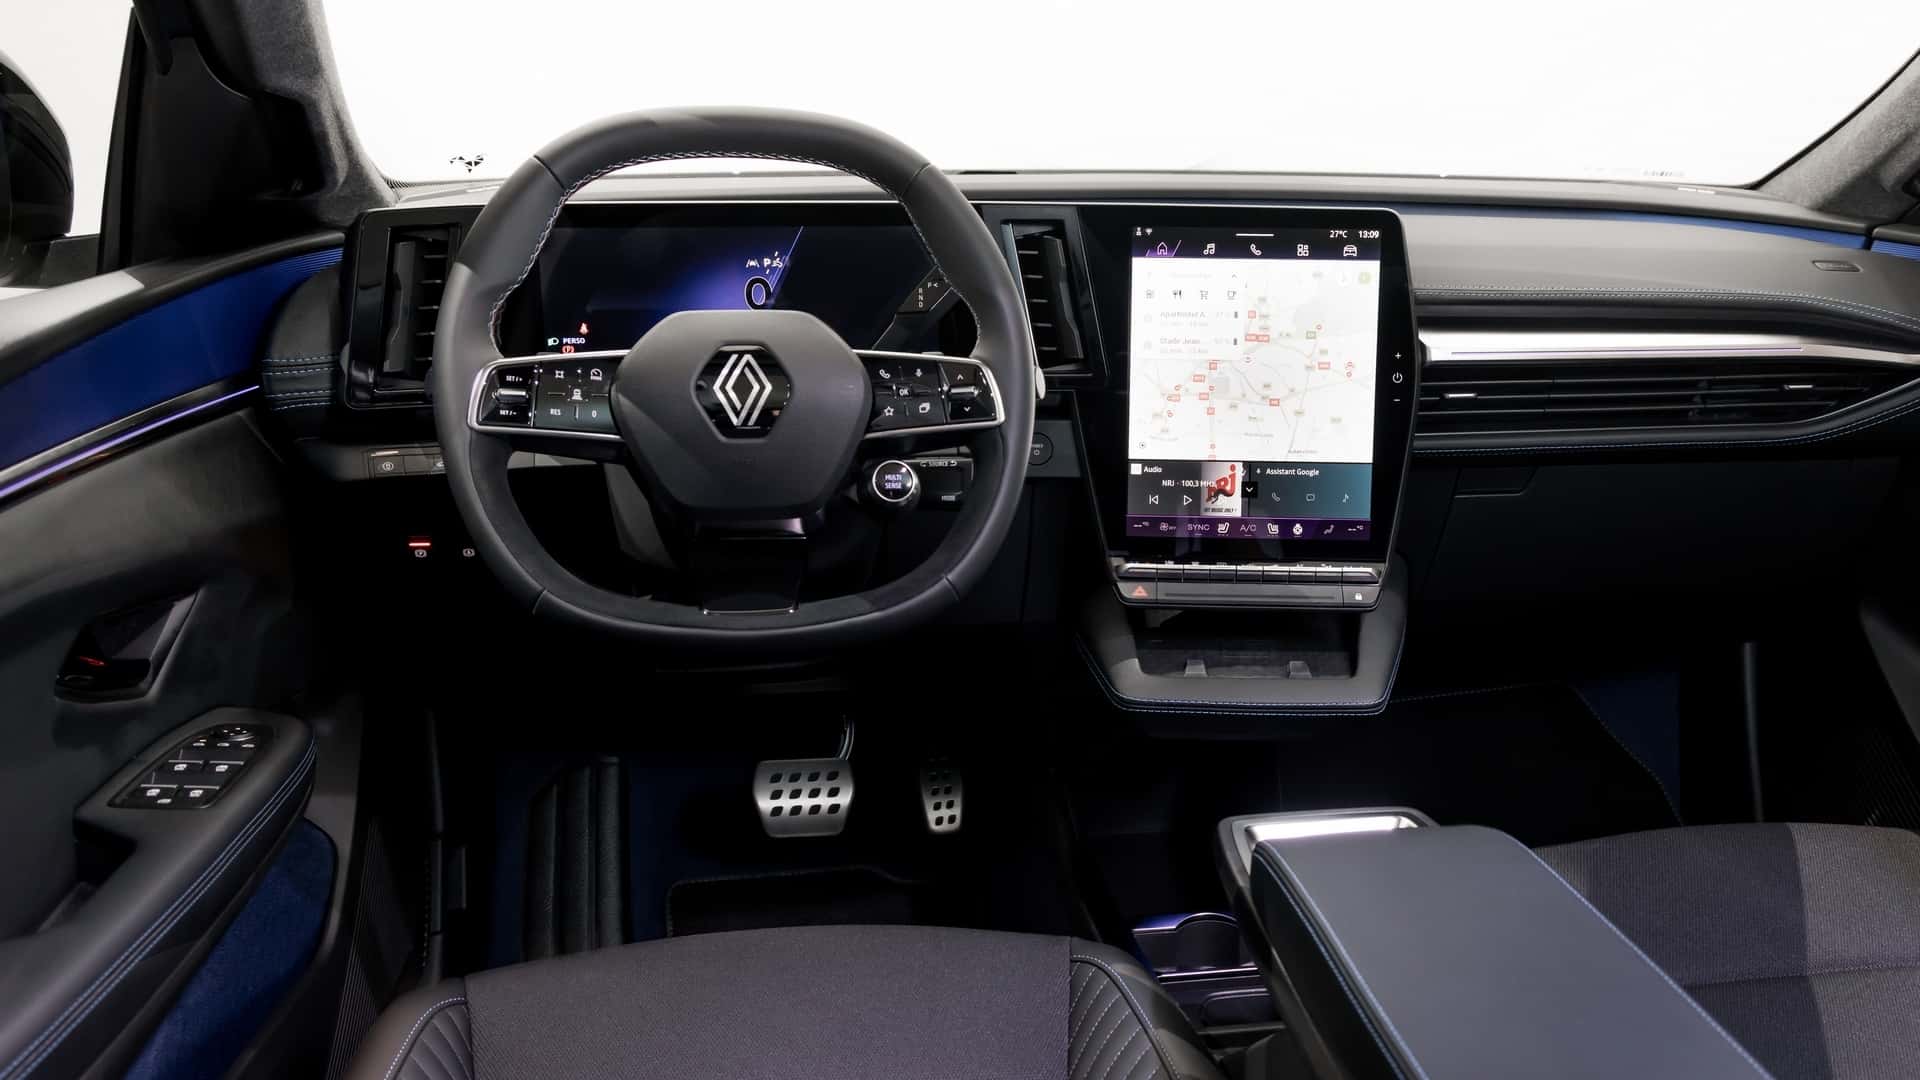 Renault Scenic Etech Dashboard